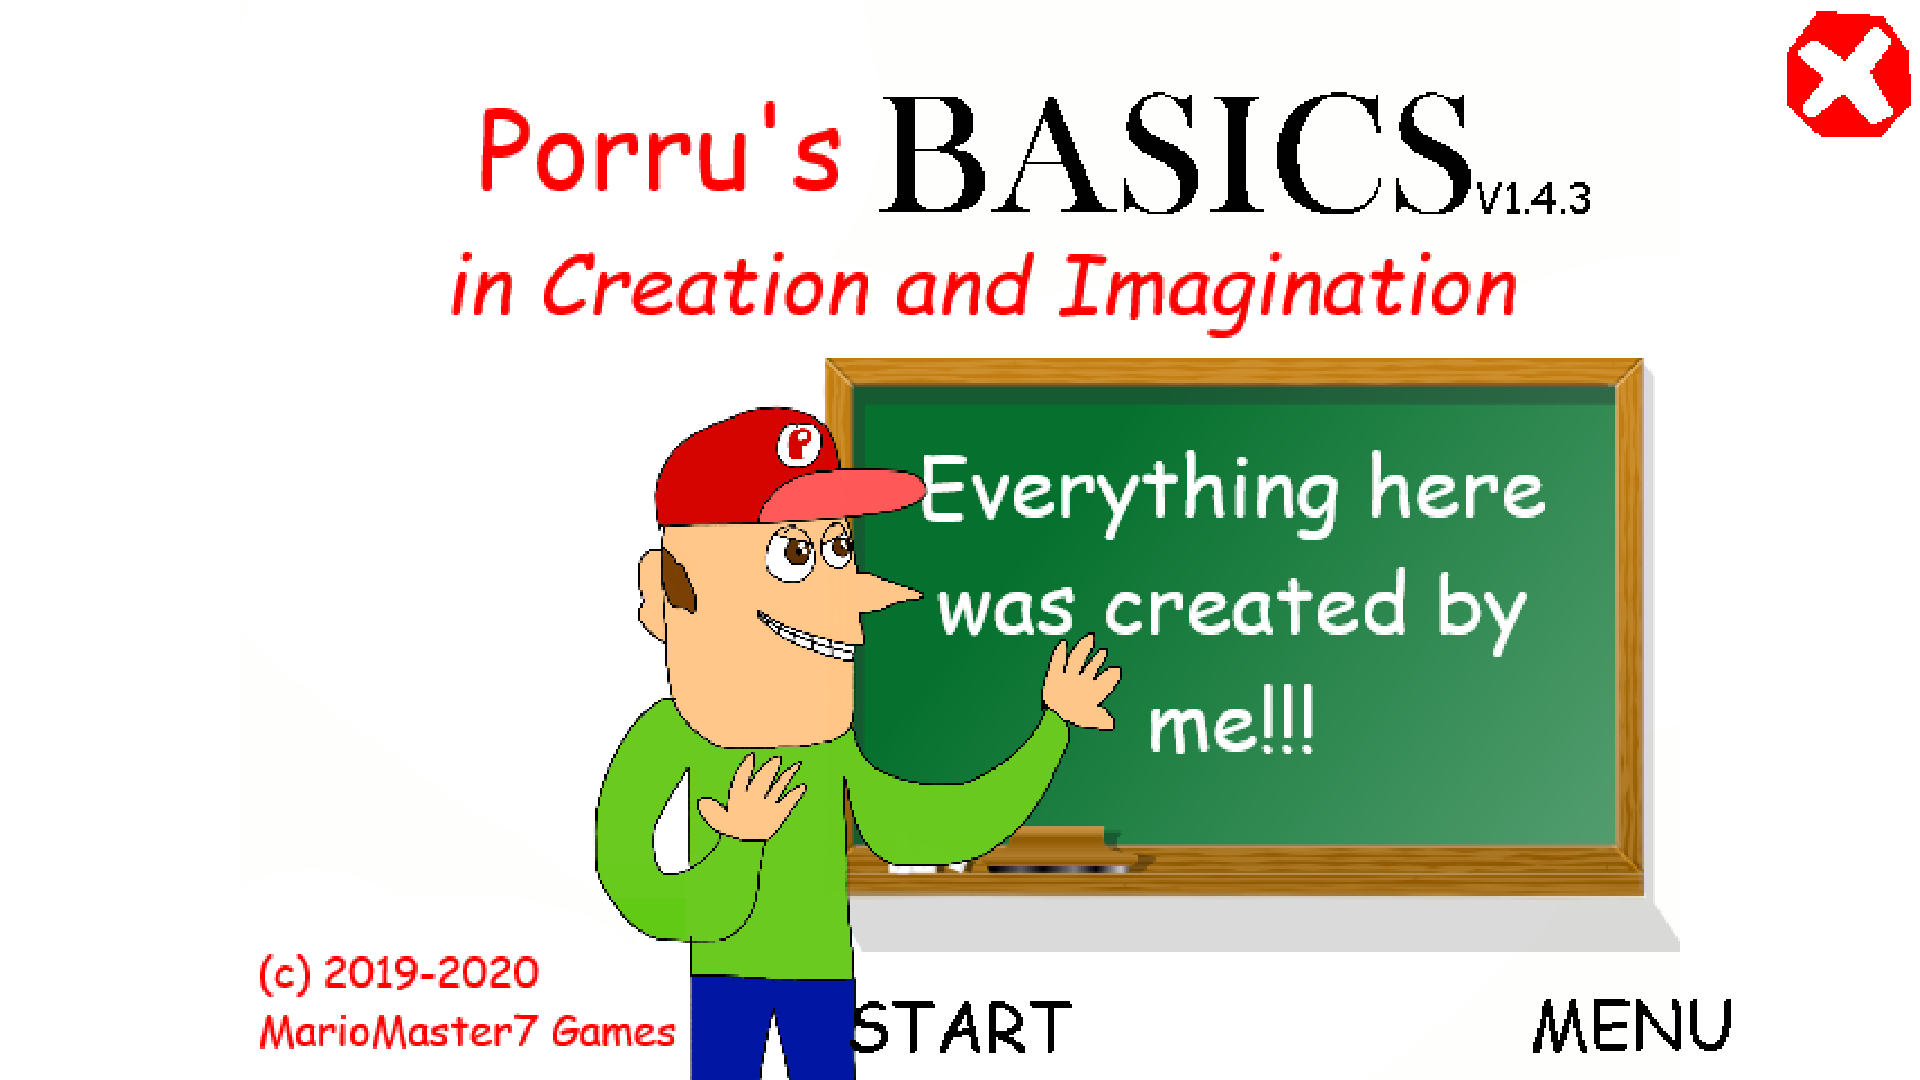 Porru's Basics in Creation and Imagination - Baldi's Basics V1.4.3 Mod